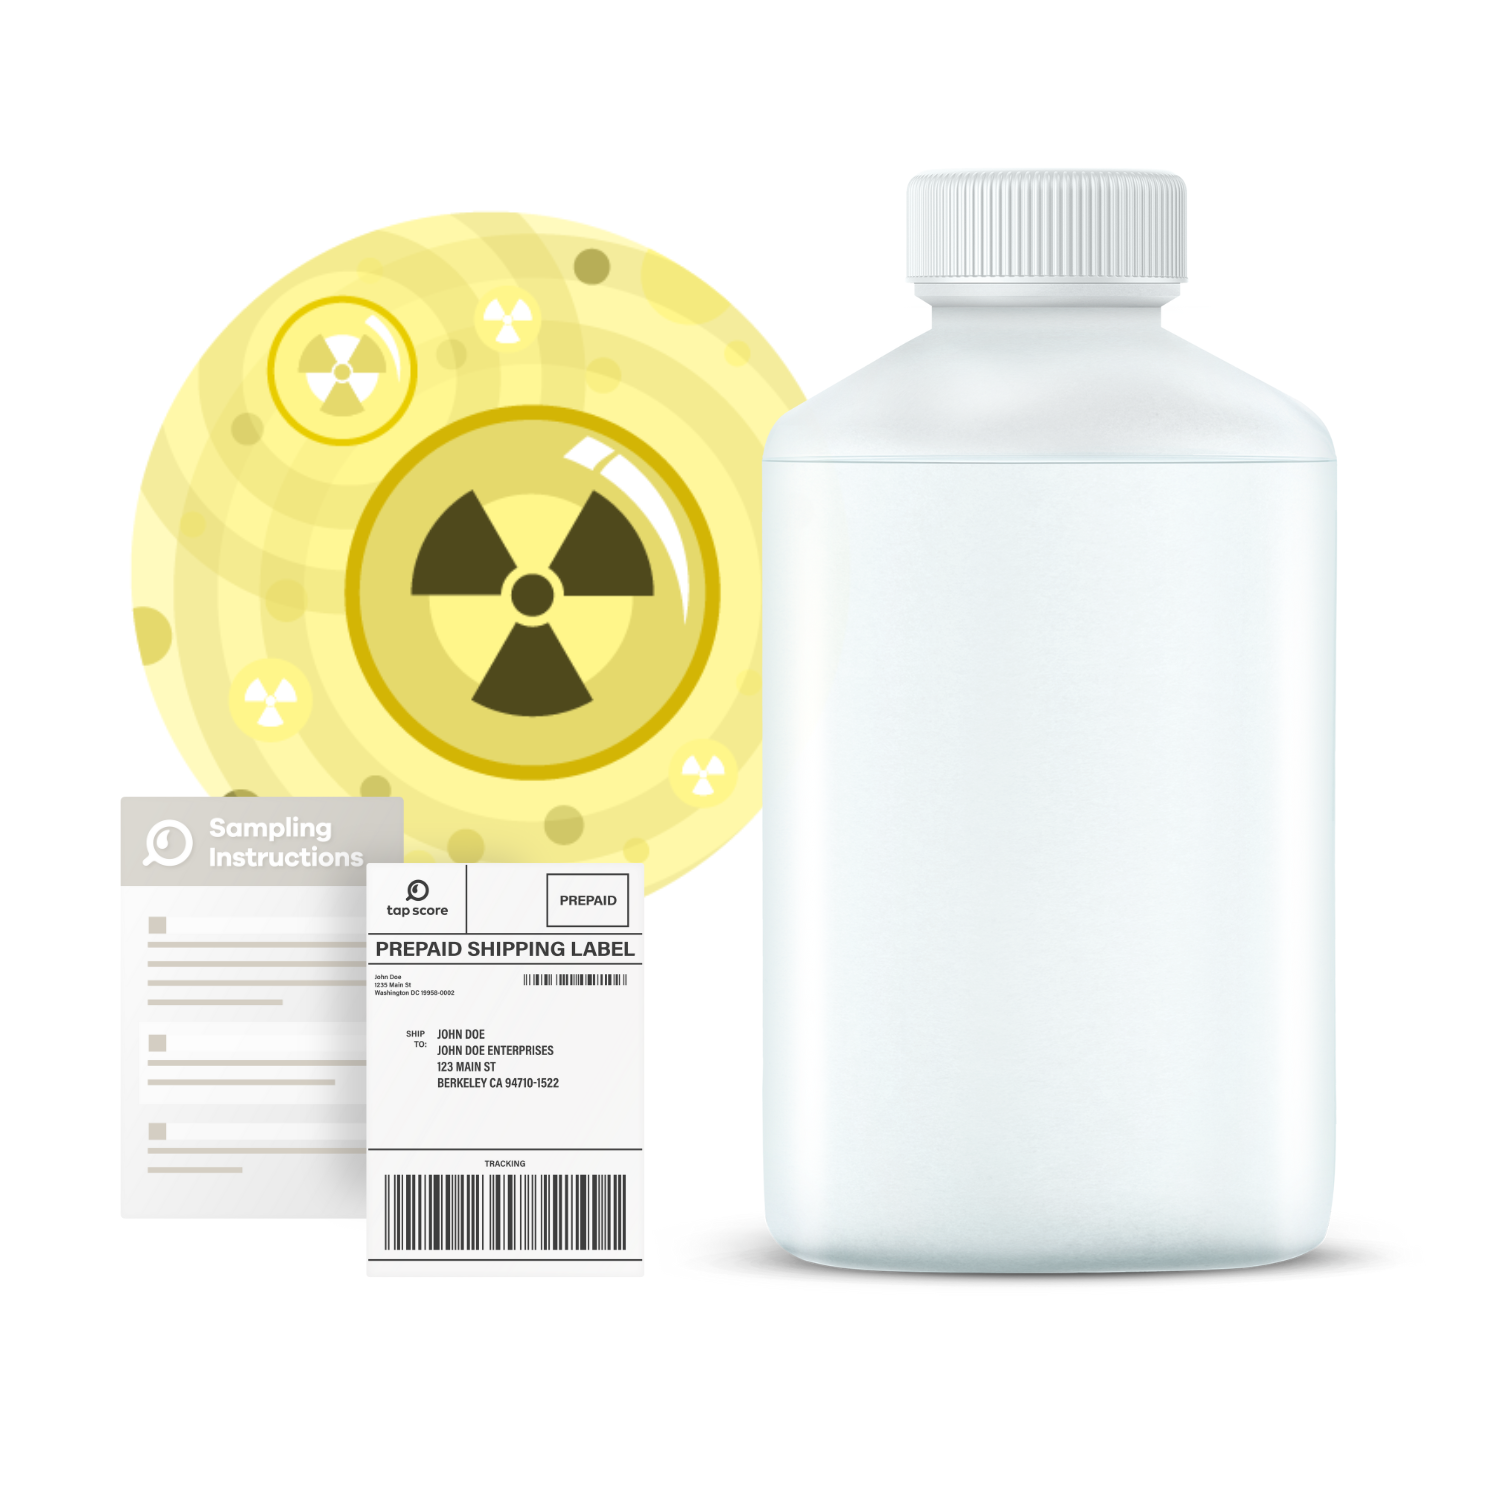 Full Radiation Water Test Kit Sampling Materials